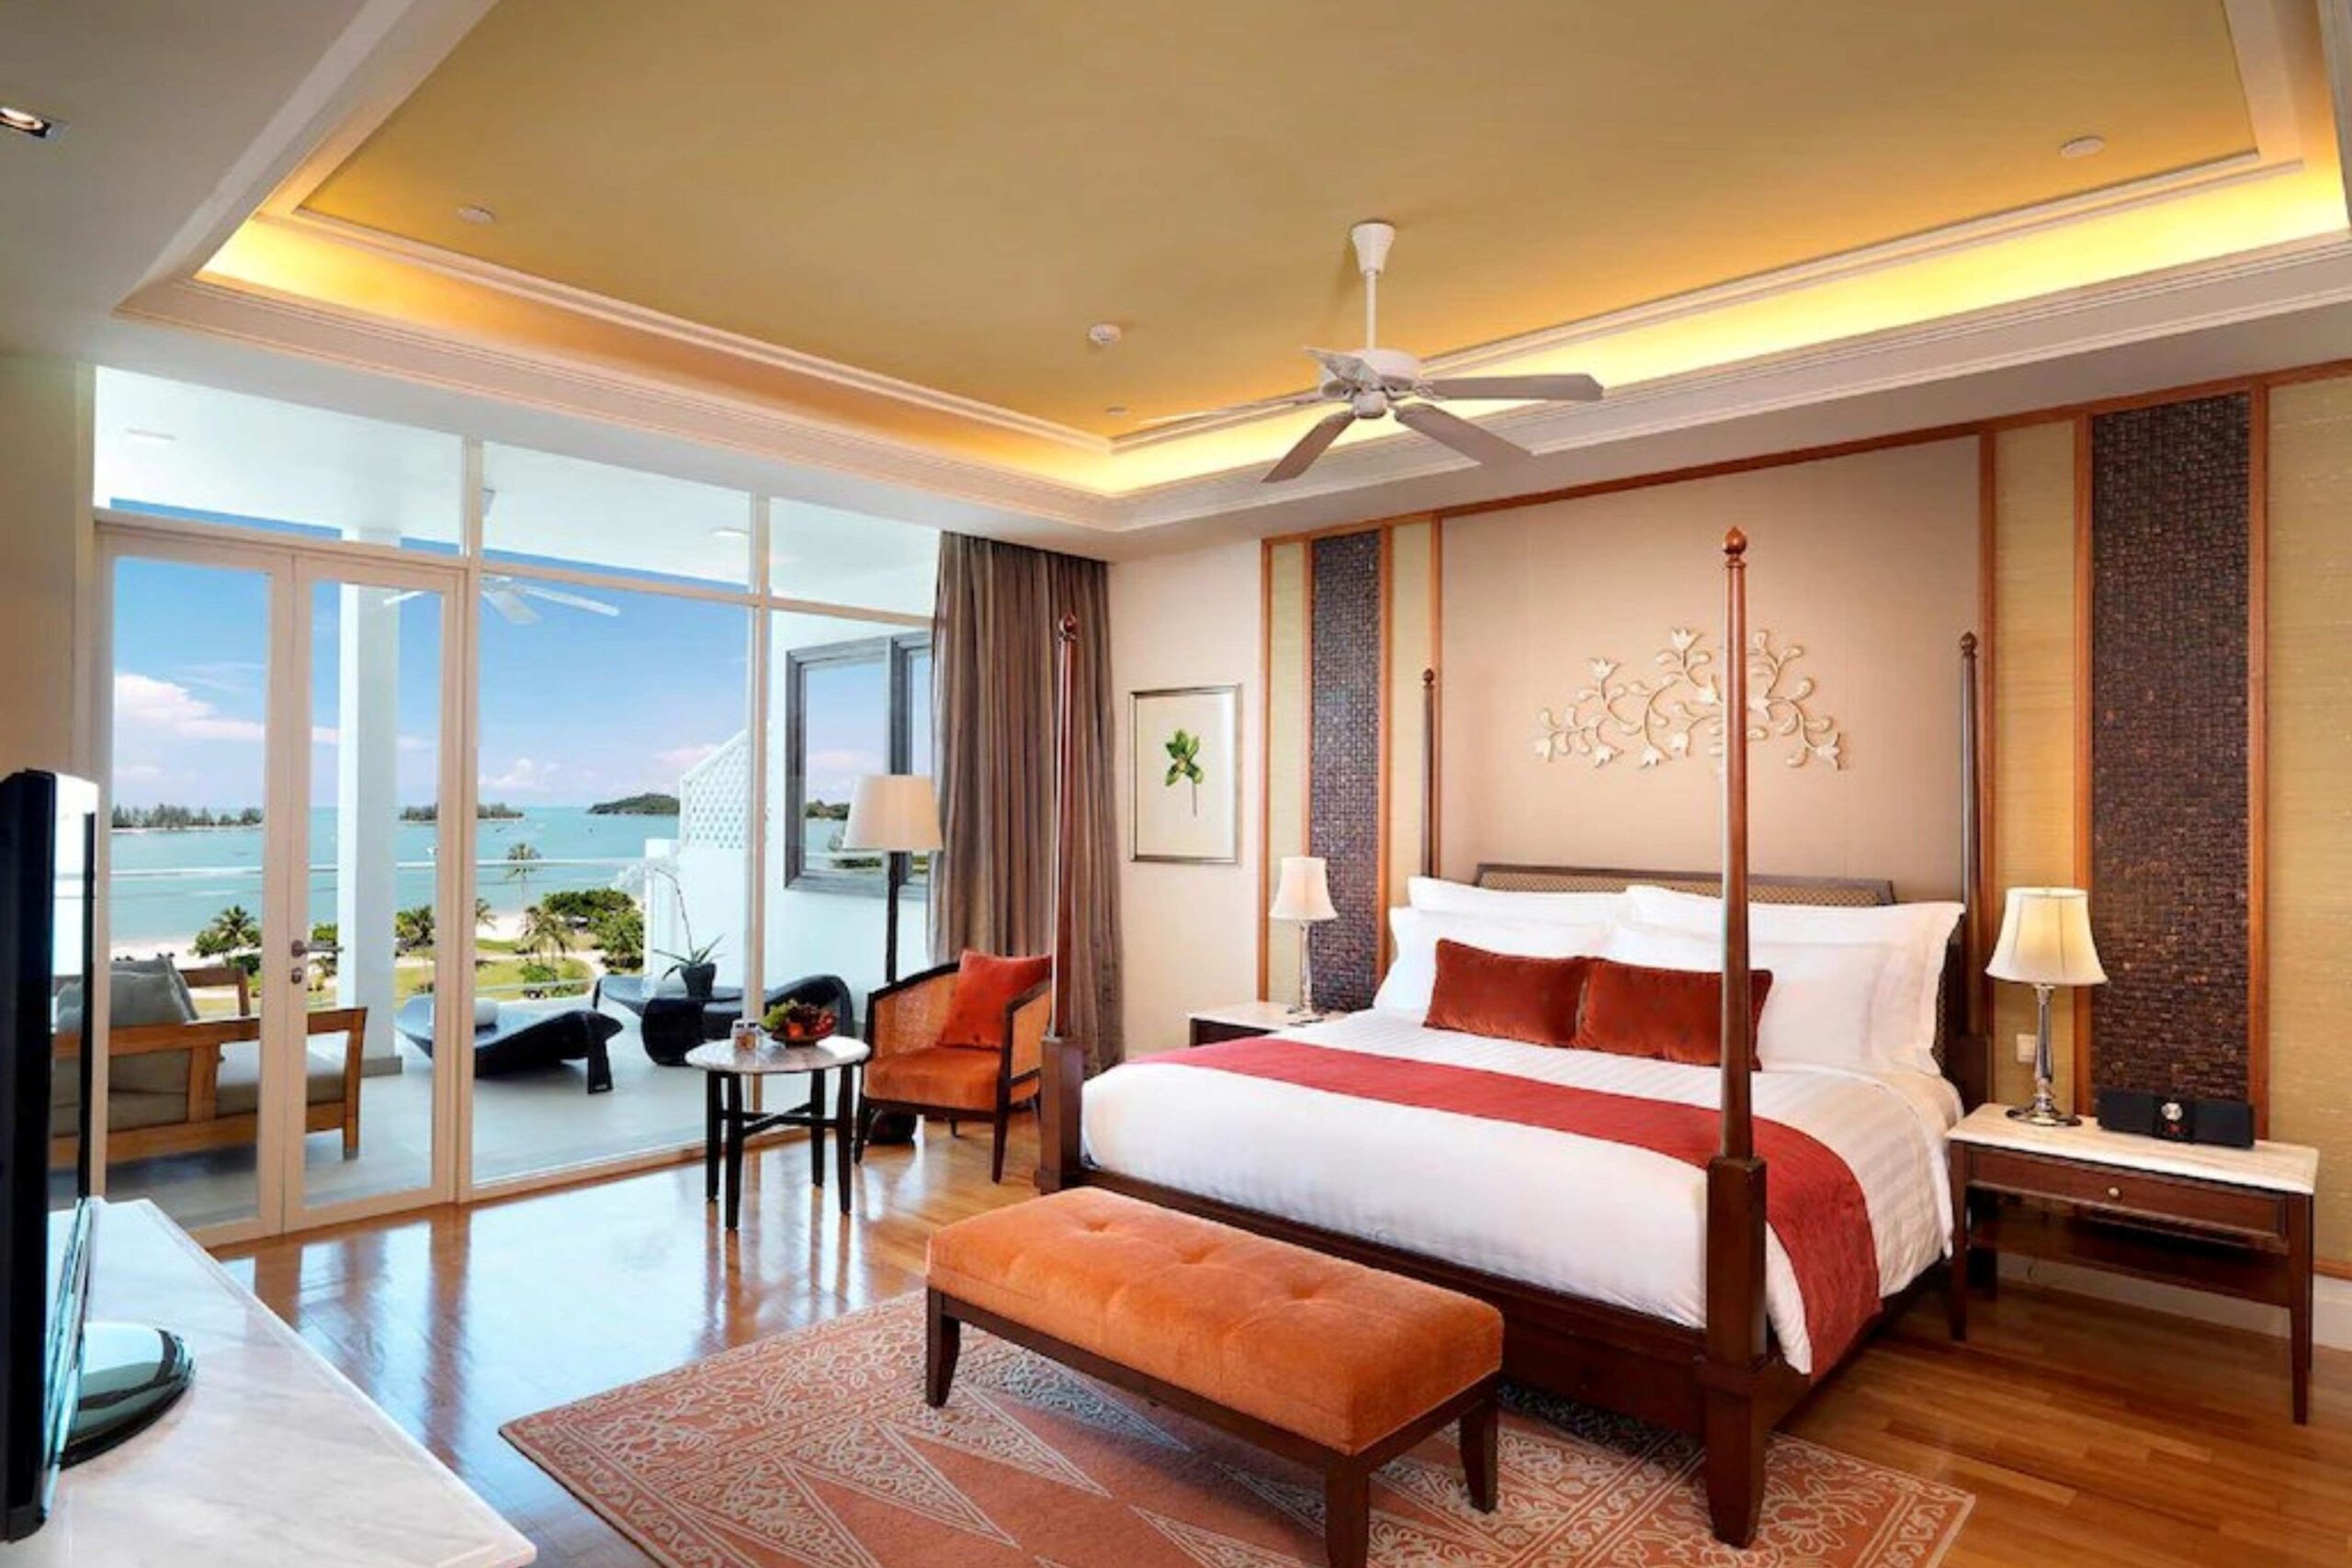 Luxury hotel bedroom interior design